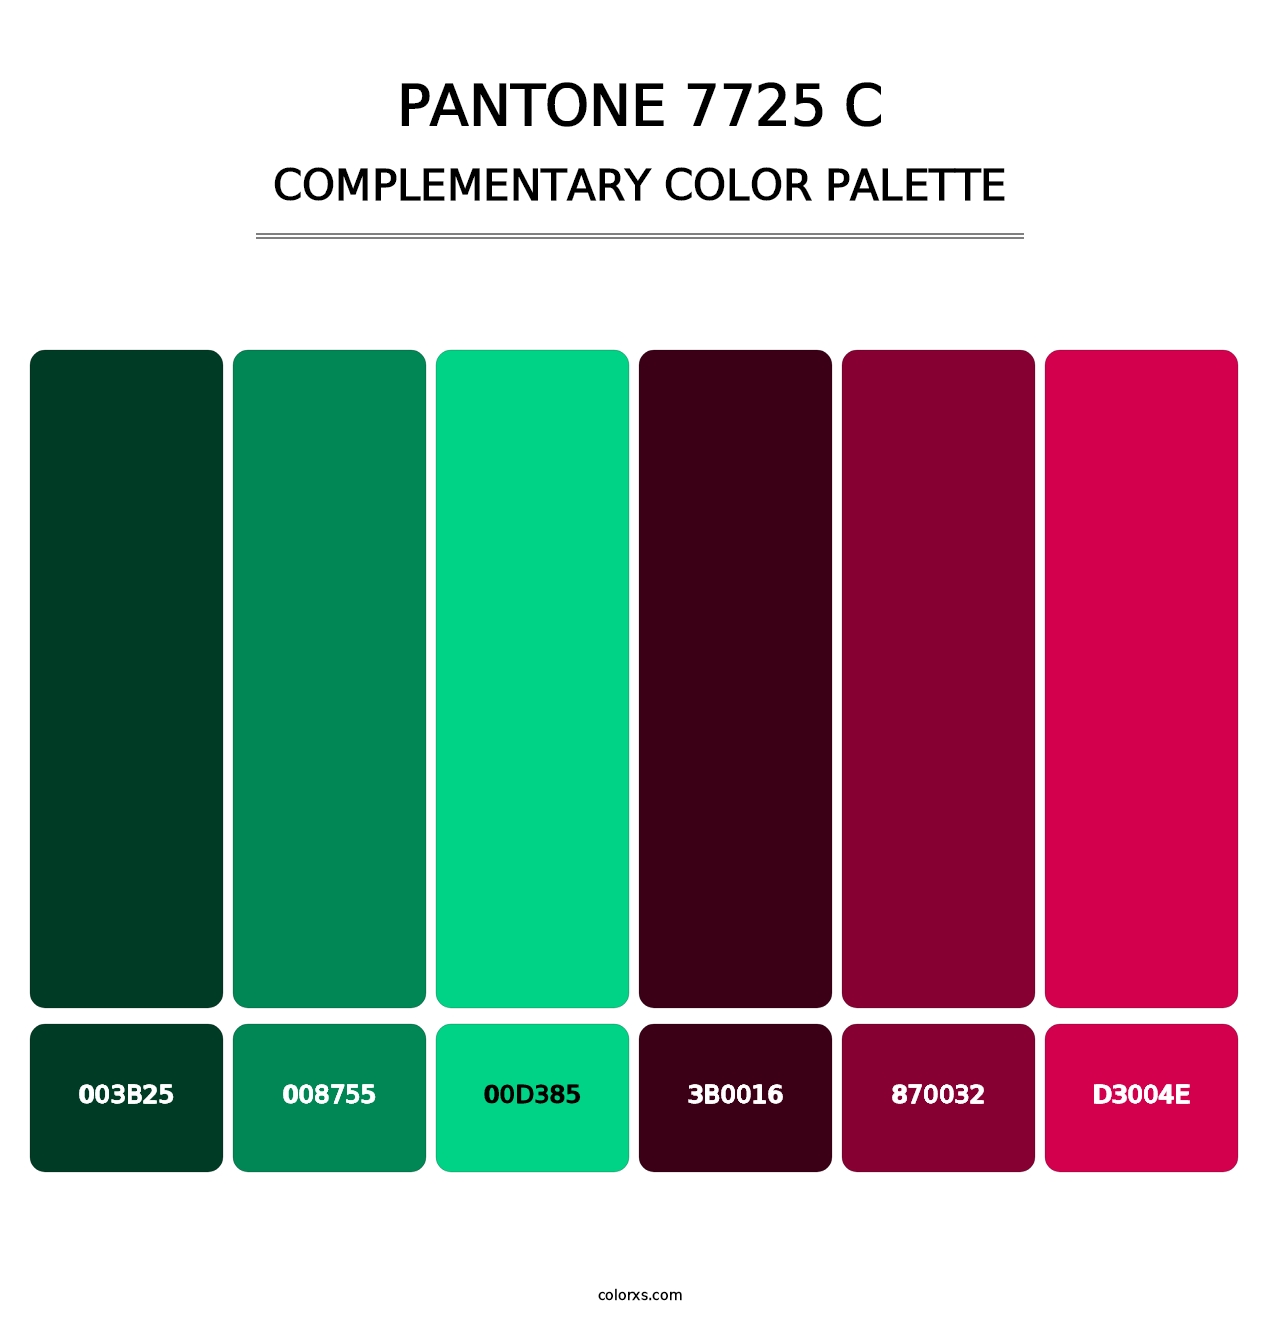 PANTONE 7725 C - Complementary Color Palette